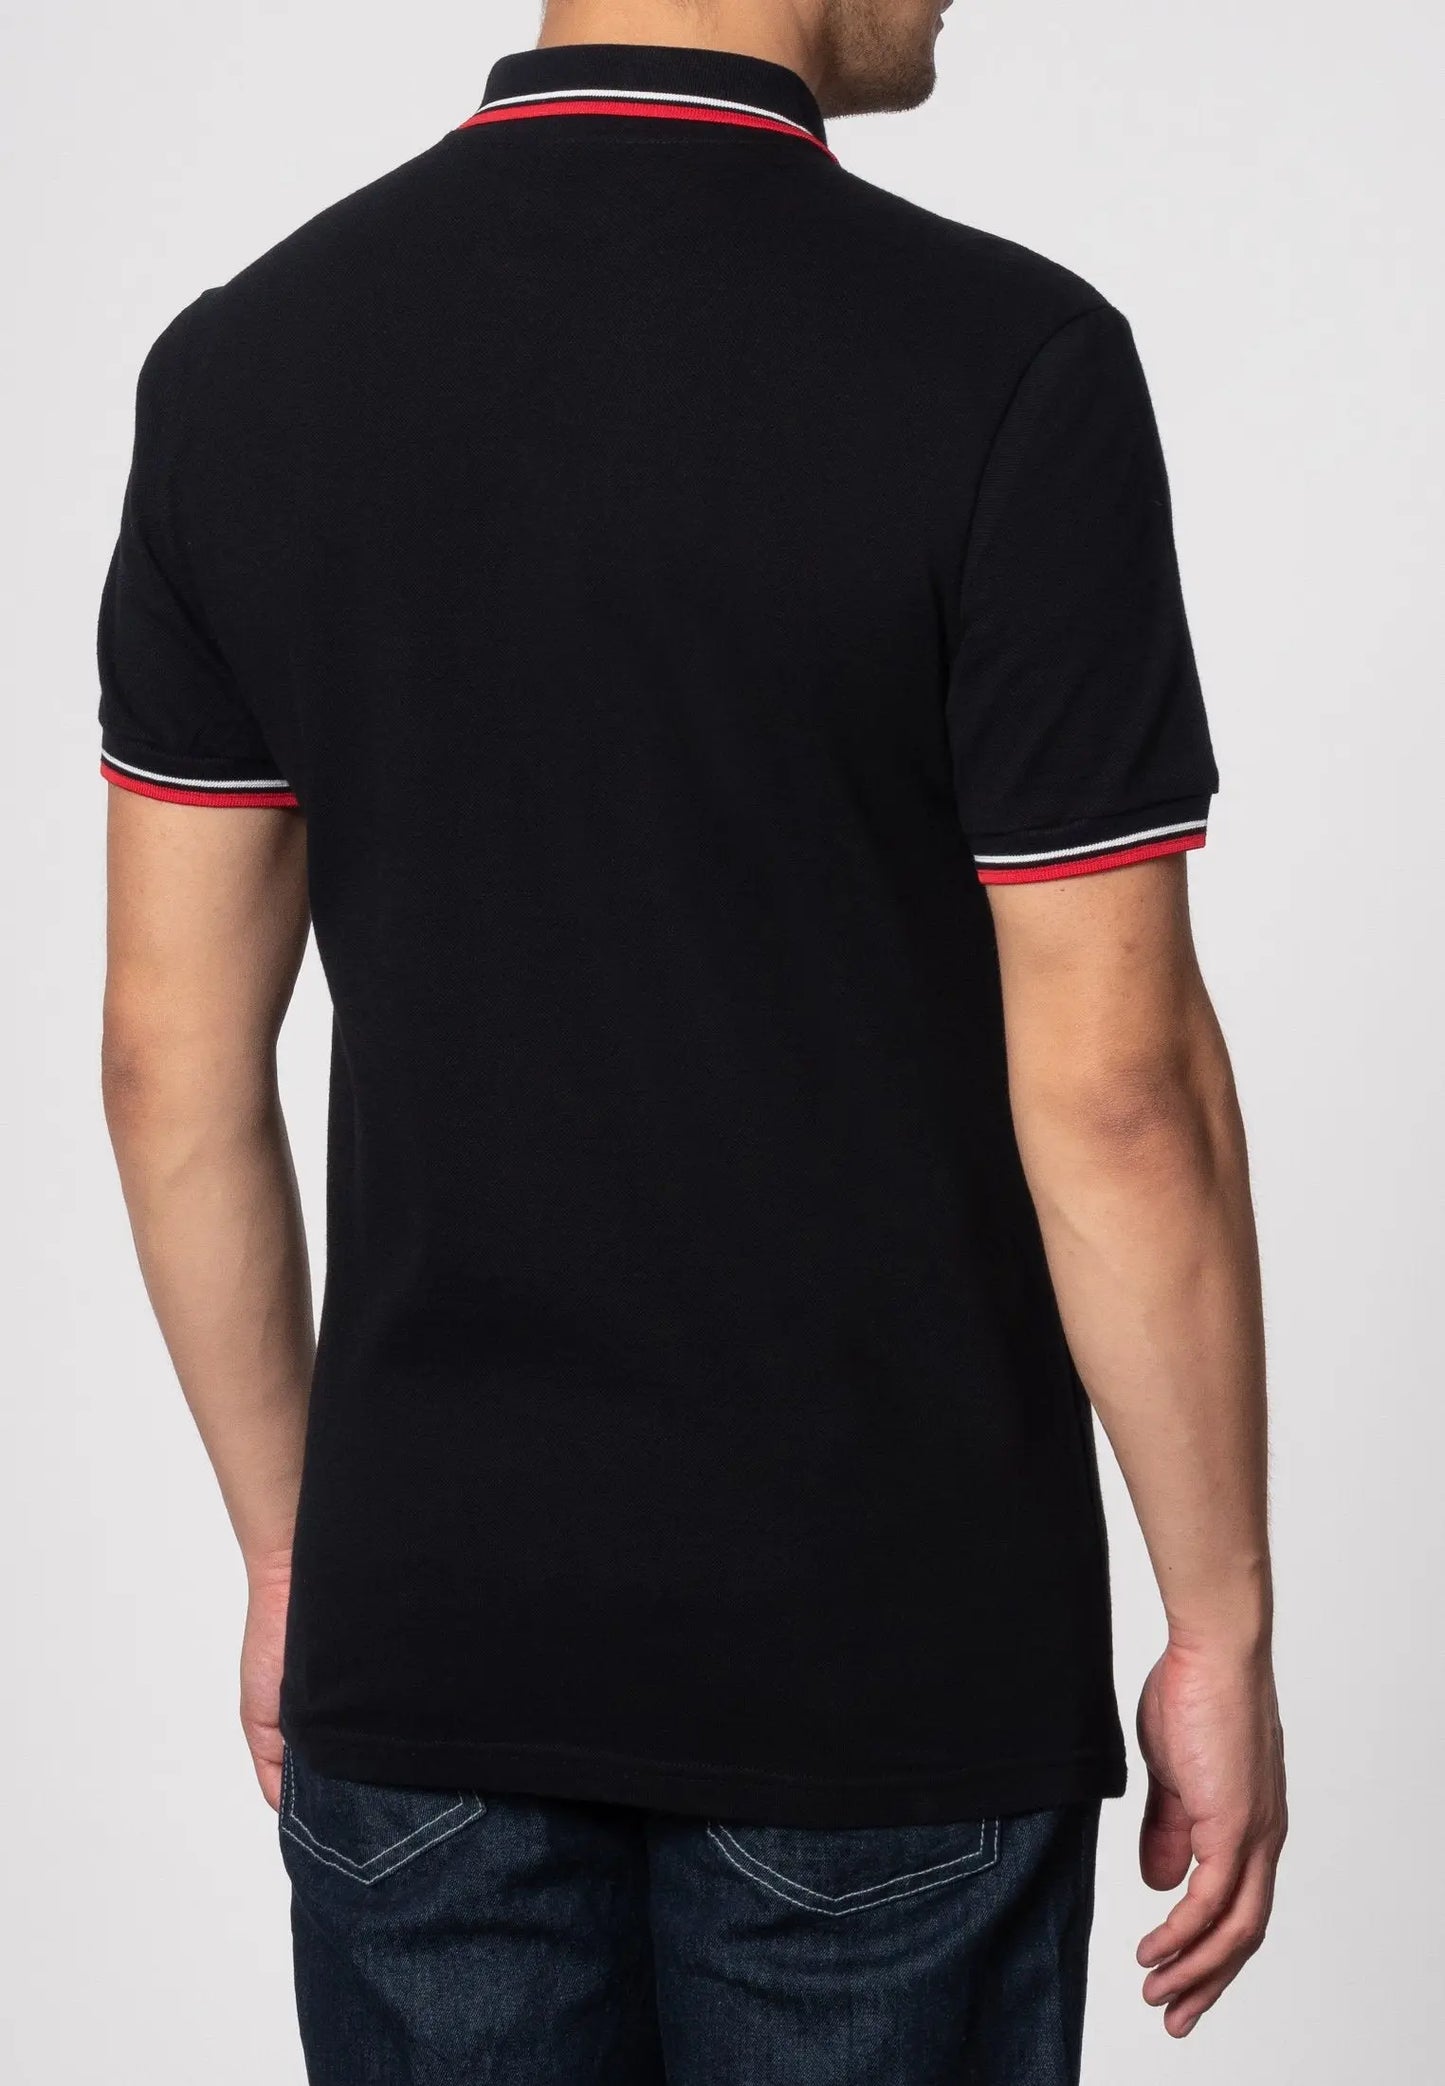 Merc London Card Polo Shirt - Black From Woven Durham